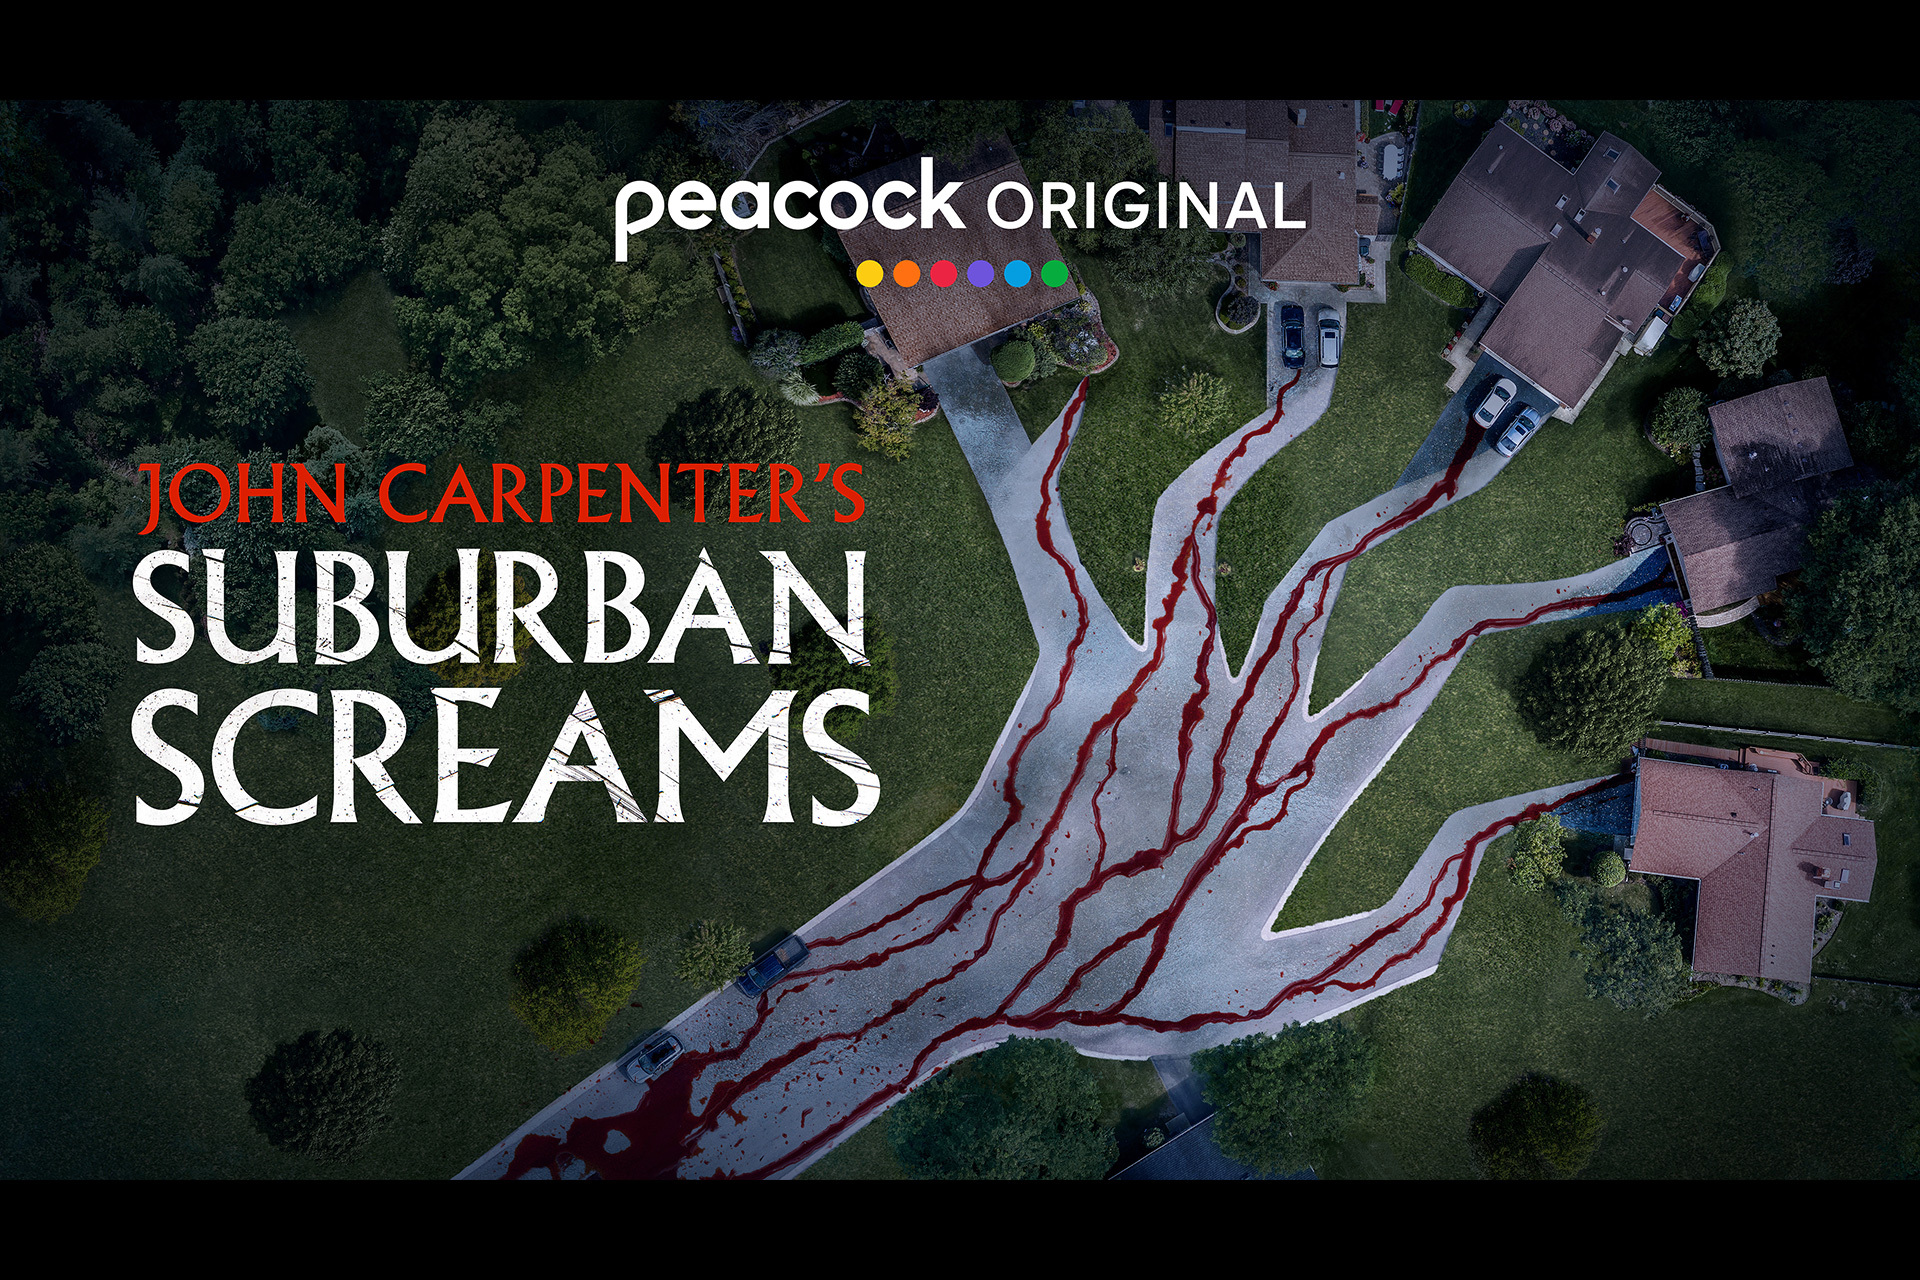 John Carpenter's Suburban Screams, October 13th